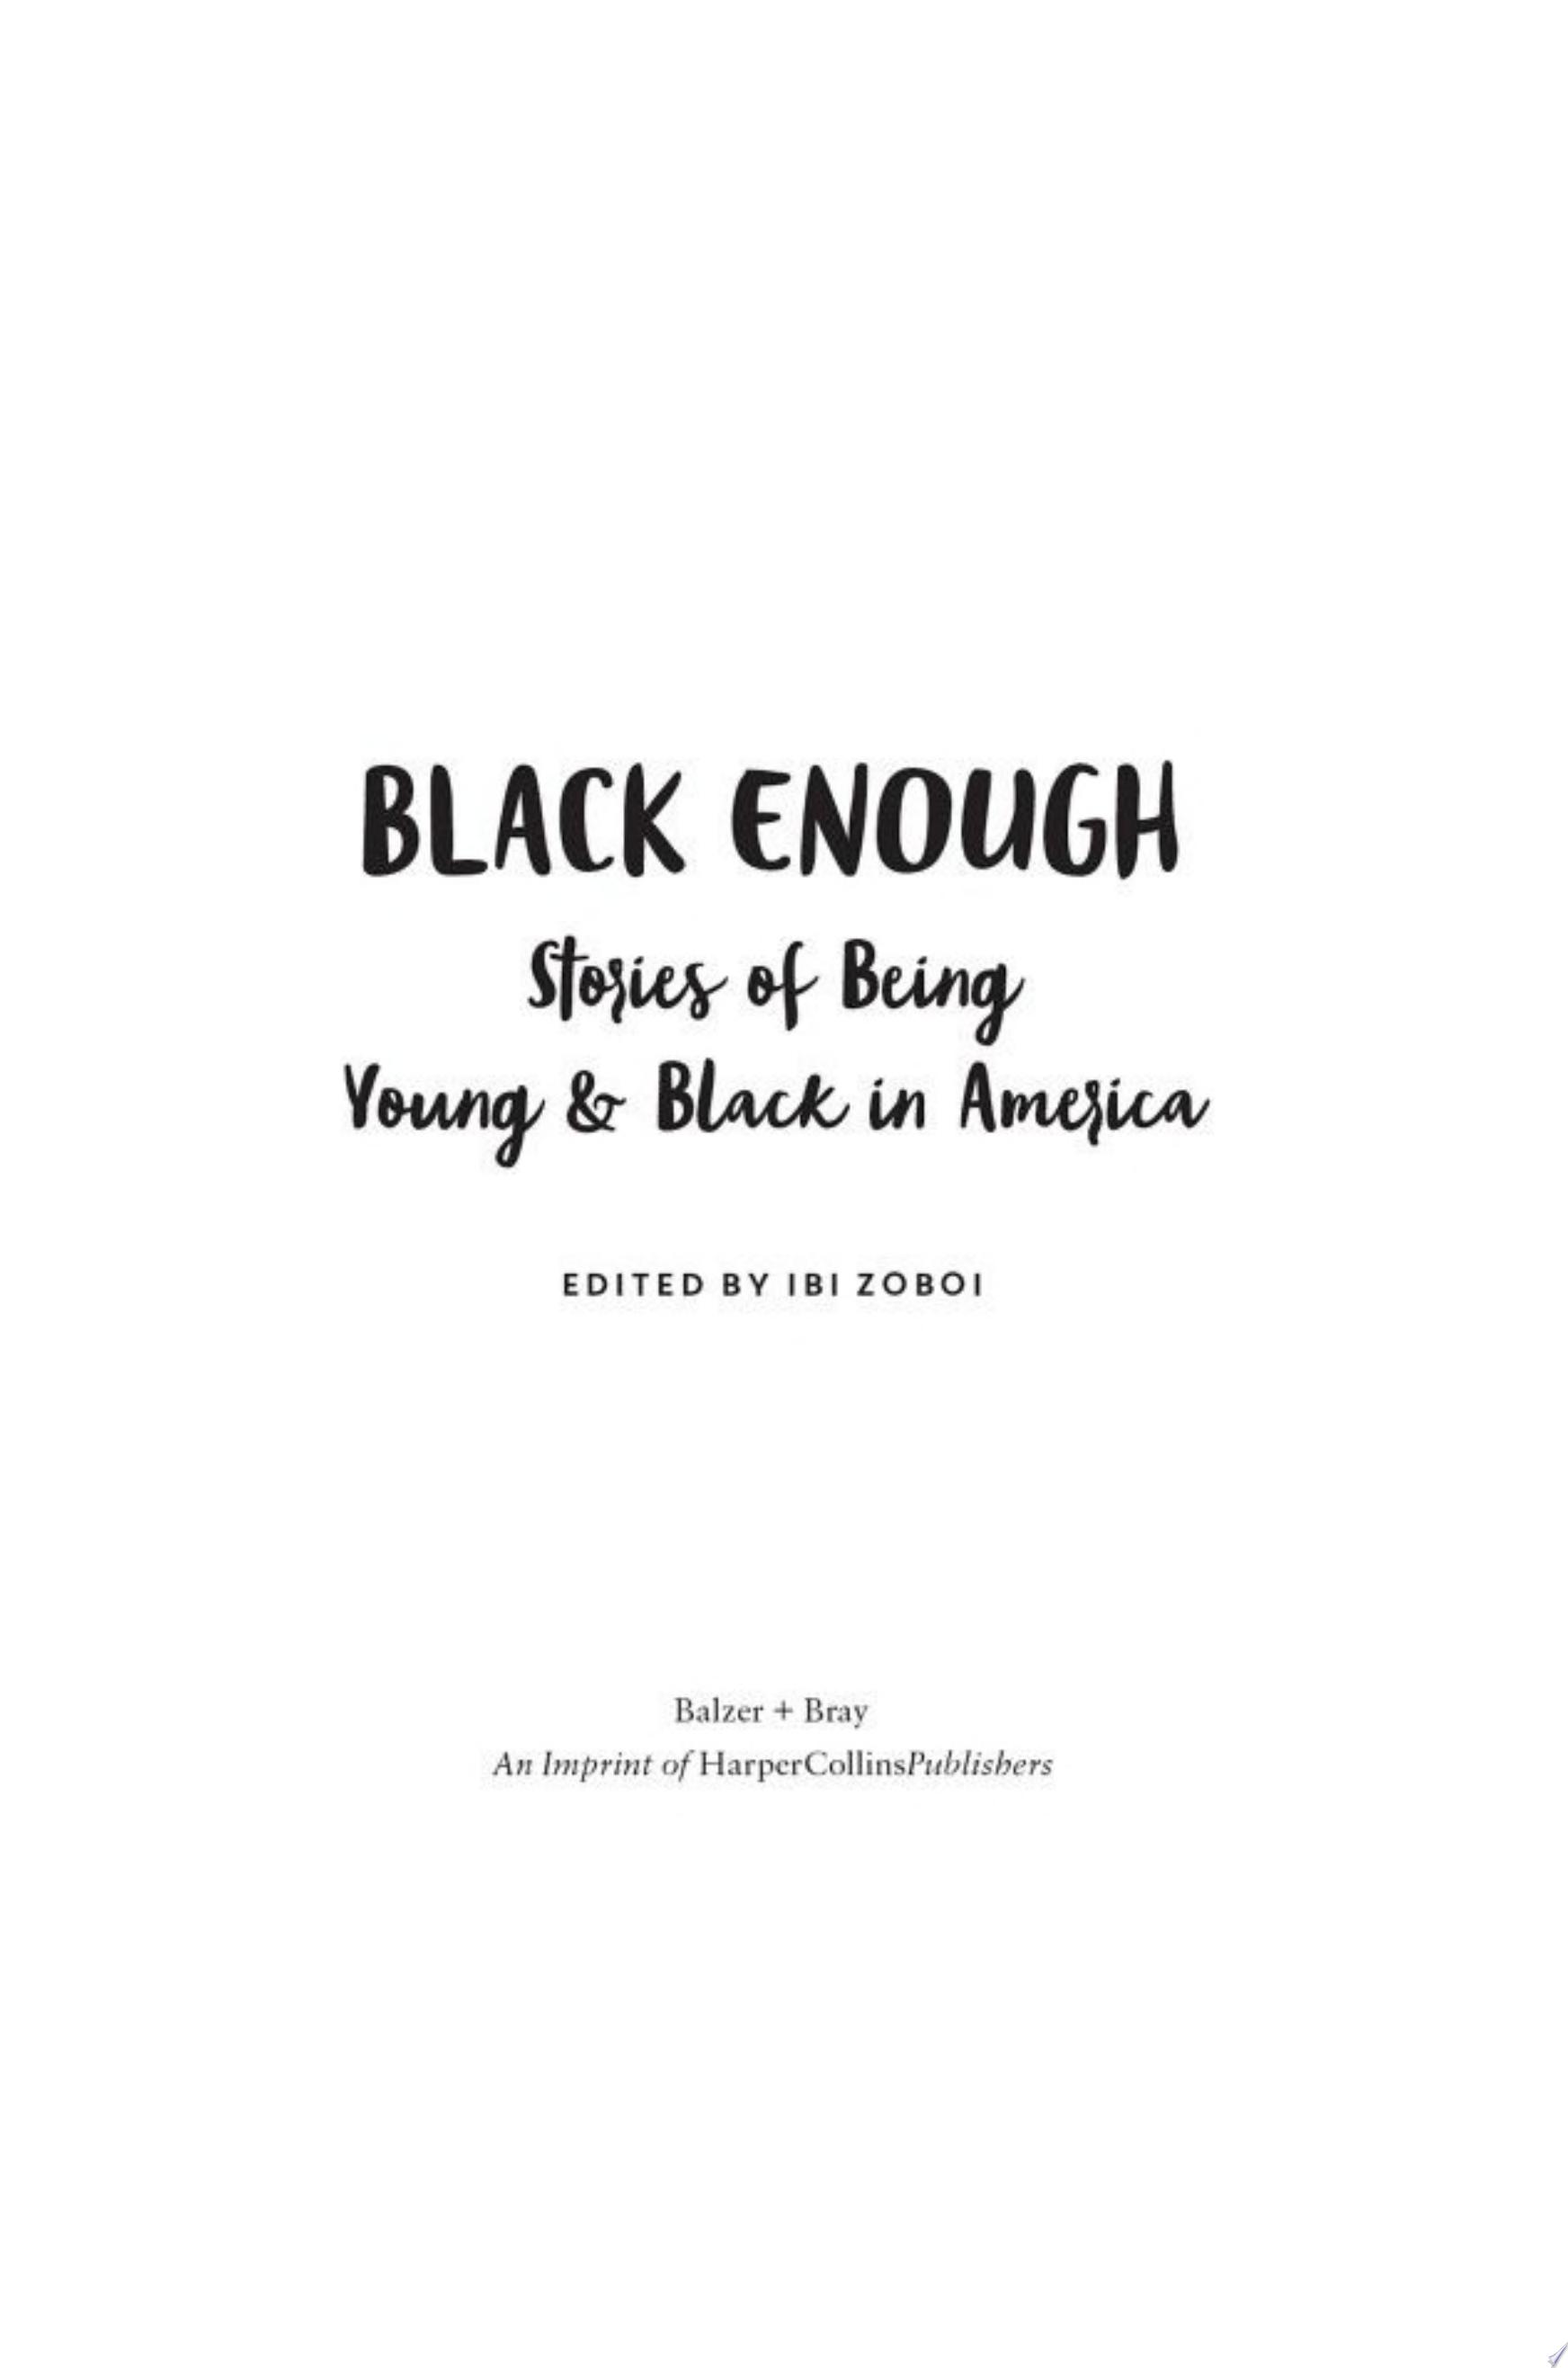 Image for "Black Enough"